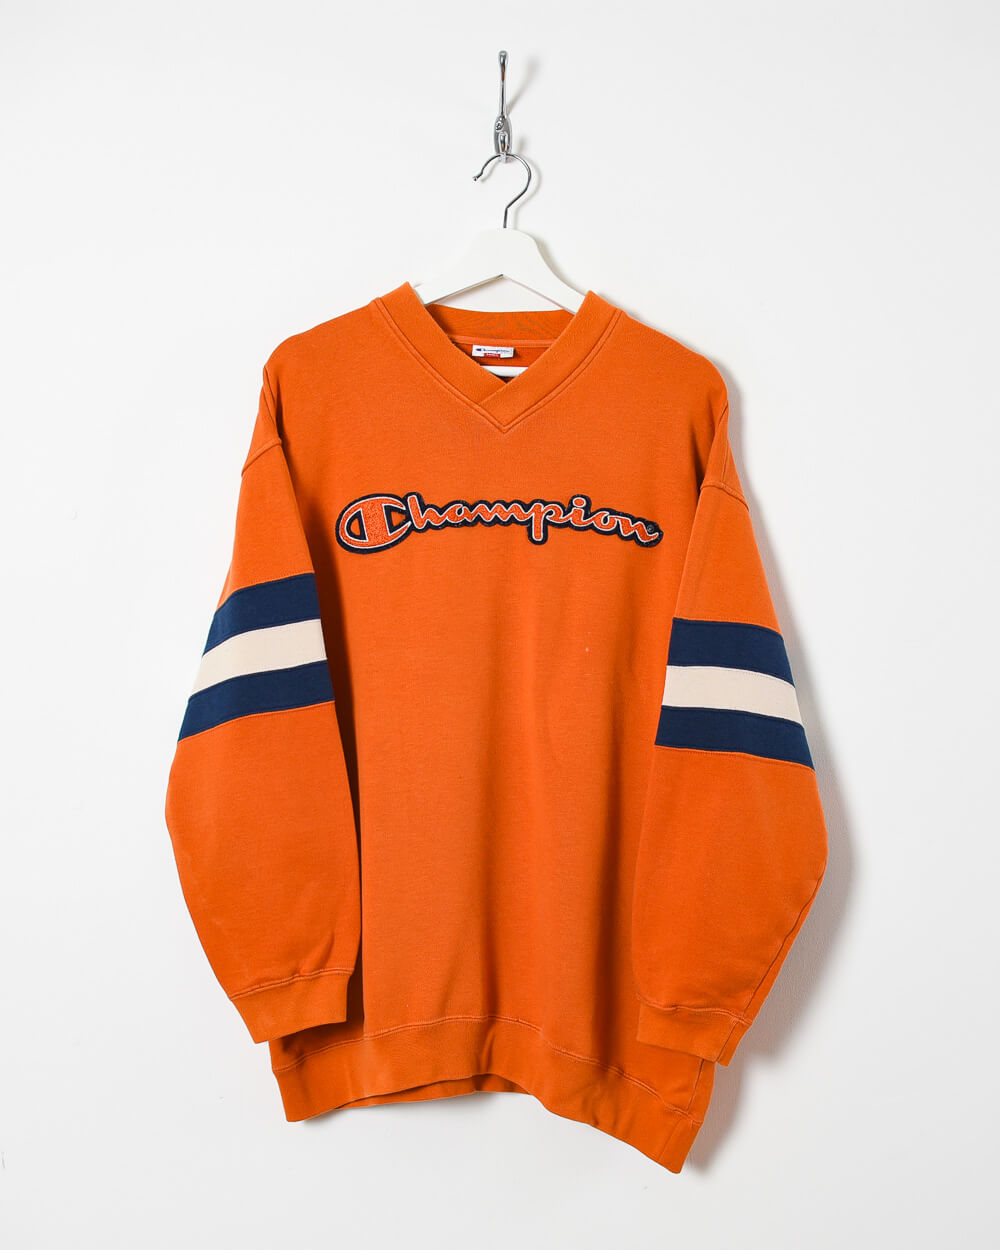 Champion Sweatshirt - Medium - Domno Vintage 90s, 80s, 00s Retro and Vintage Clothing 